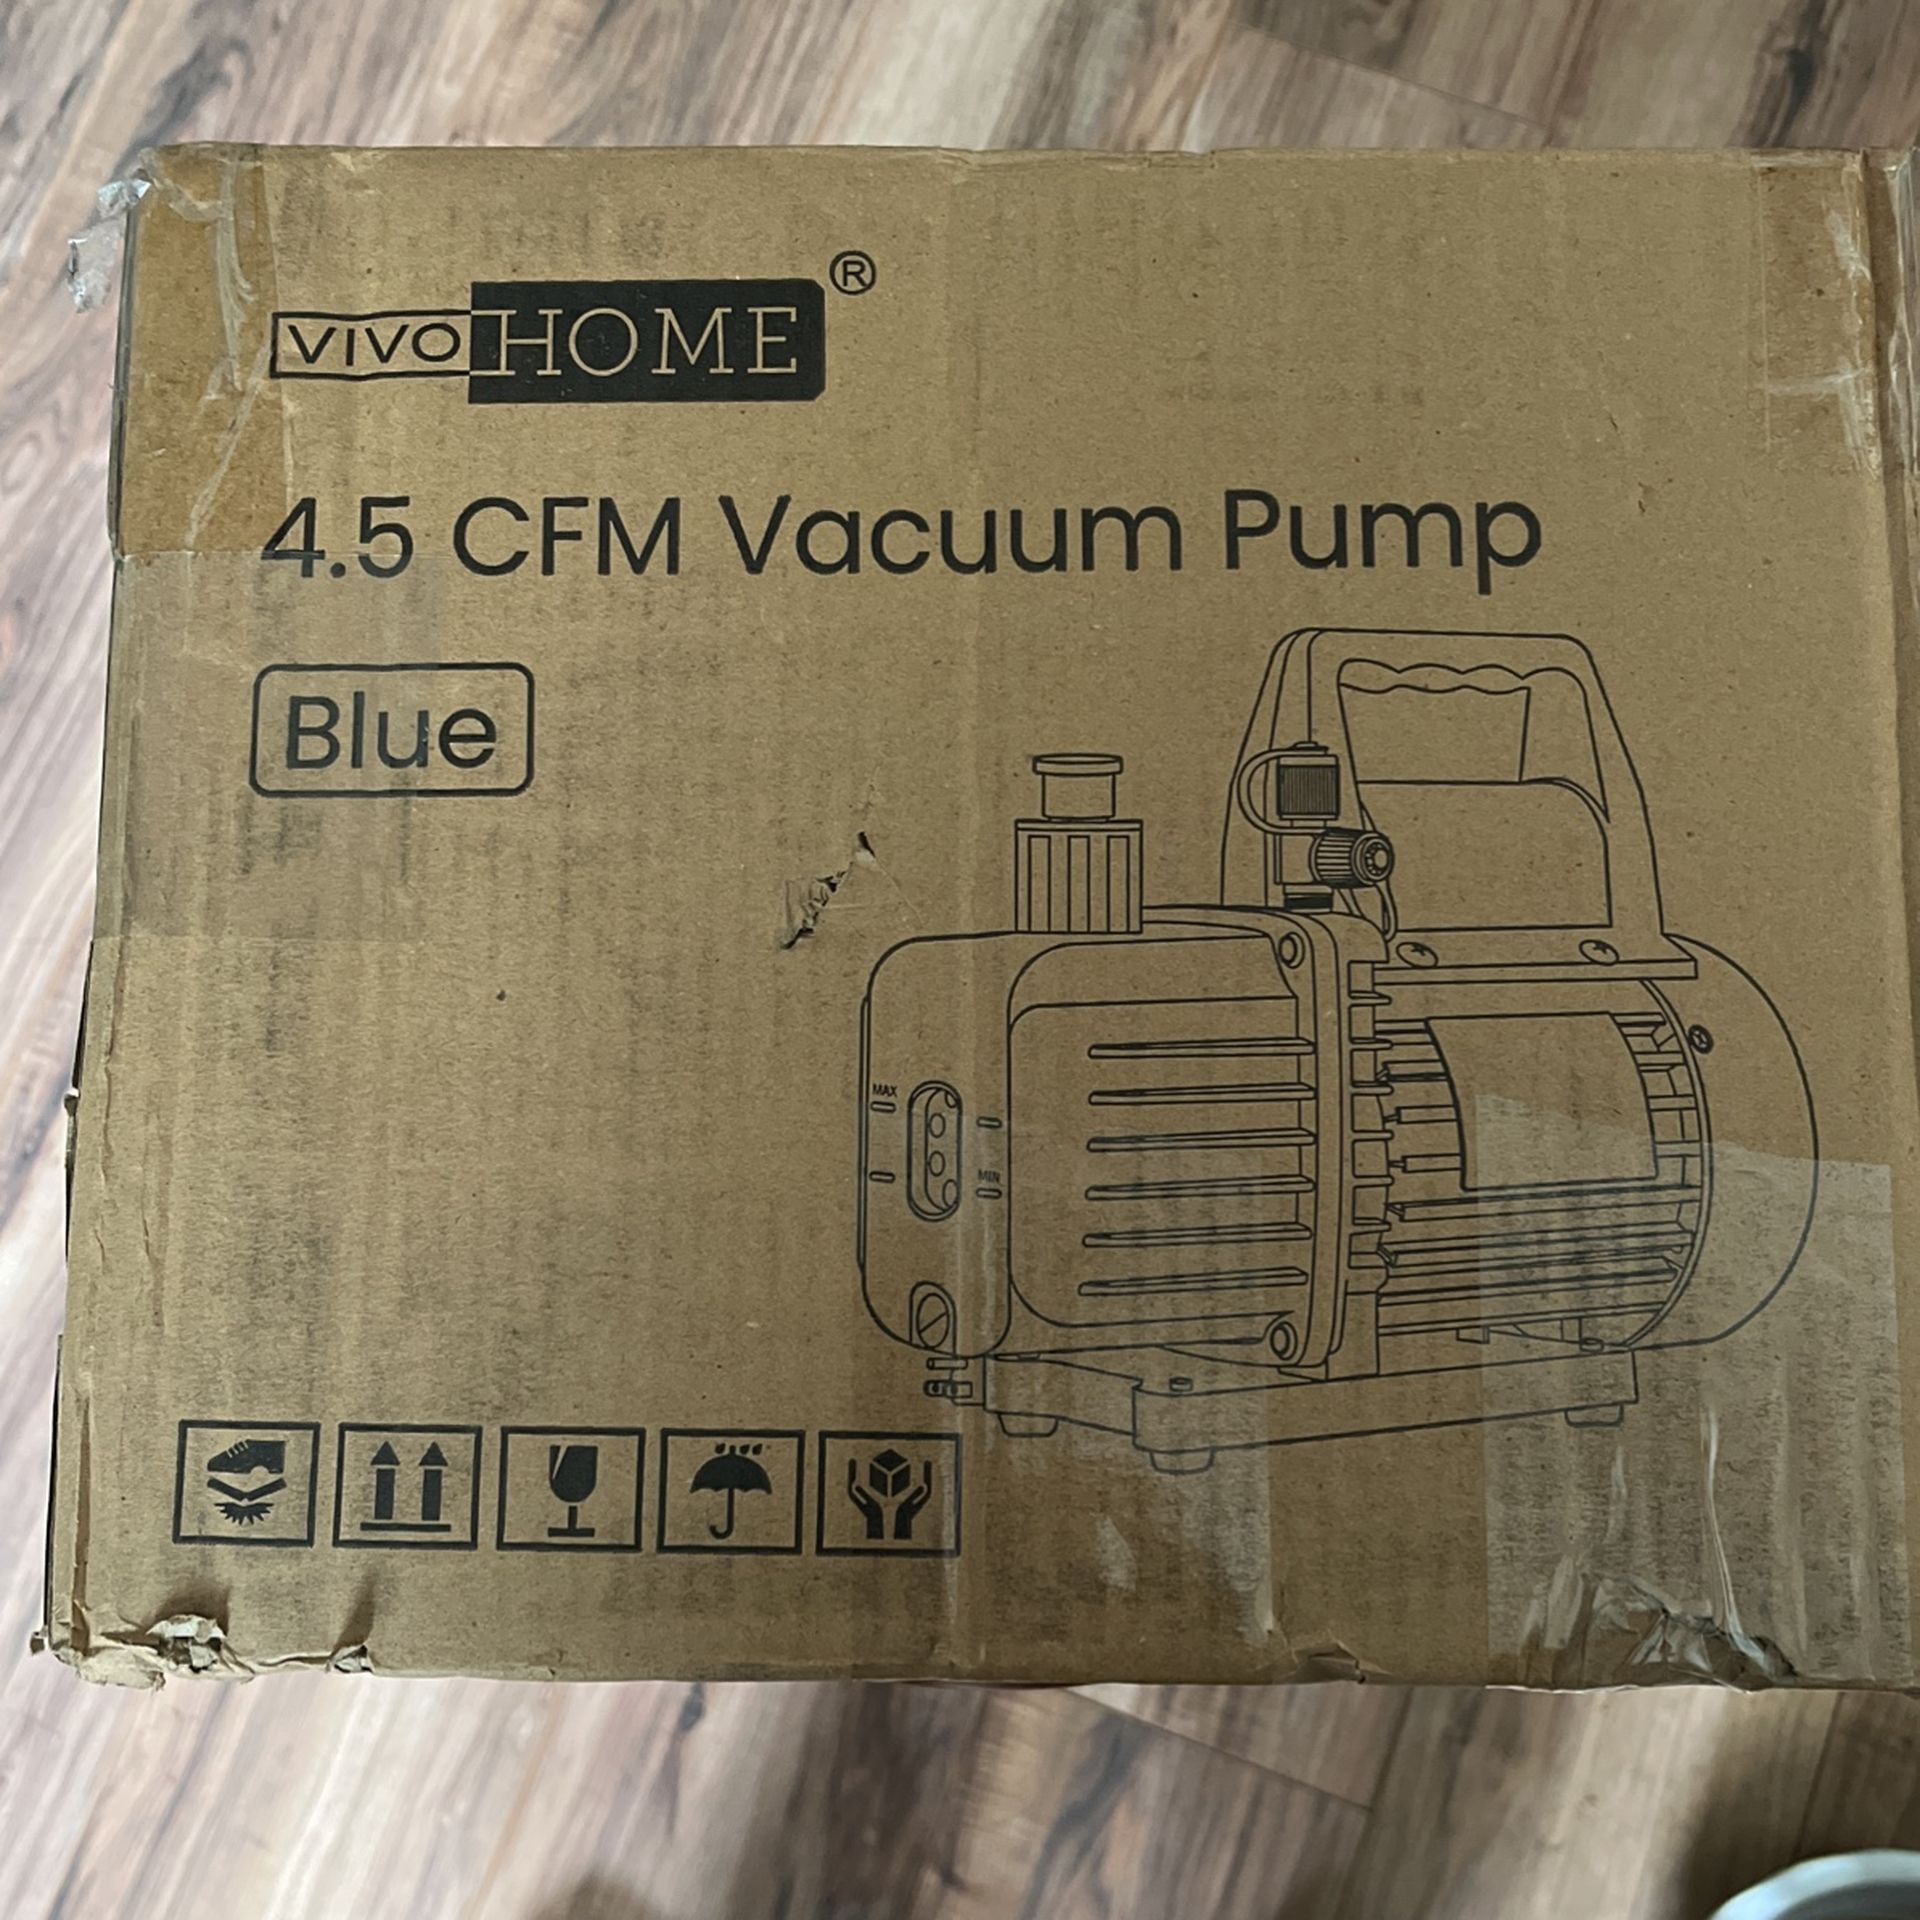 VIVO HOME 4.5 CFM VACUUM PUMP IN OPEN BOX Read Below